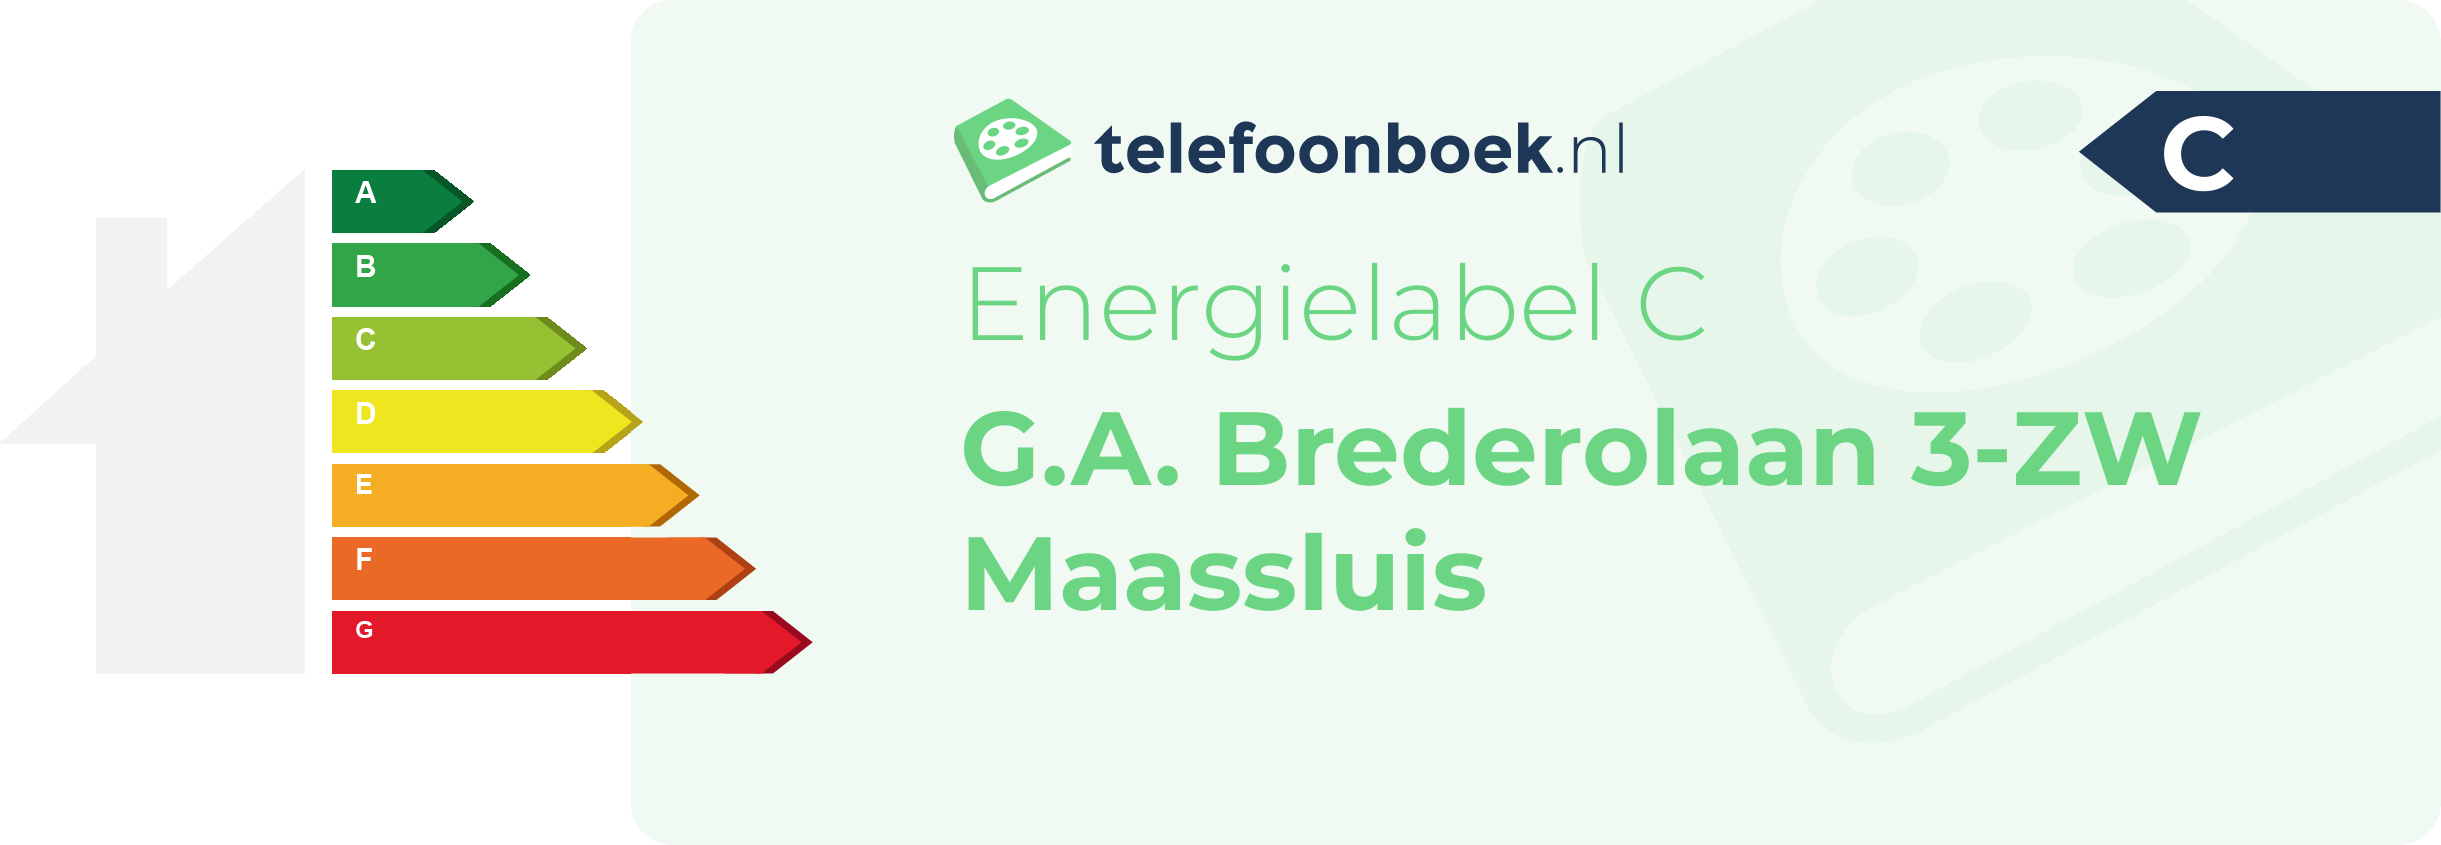 Energielabel G.A. Brederolaan 3-ZW Maassluis